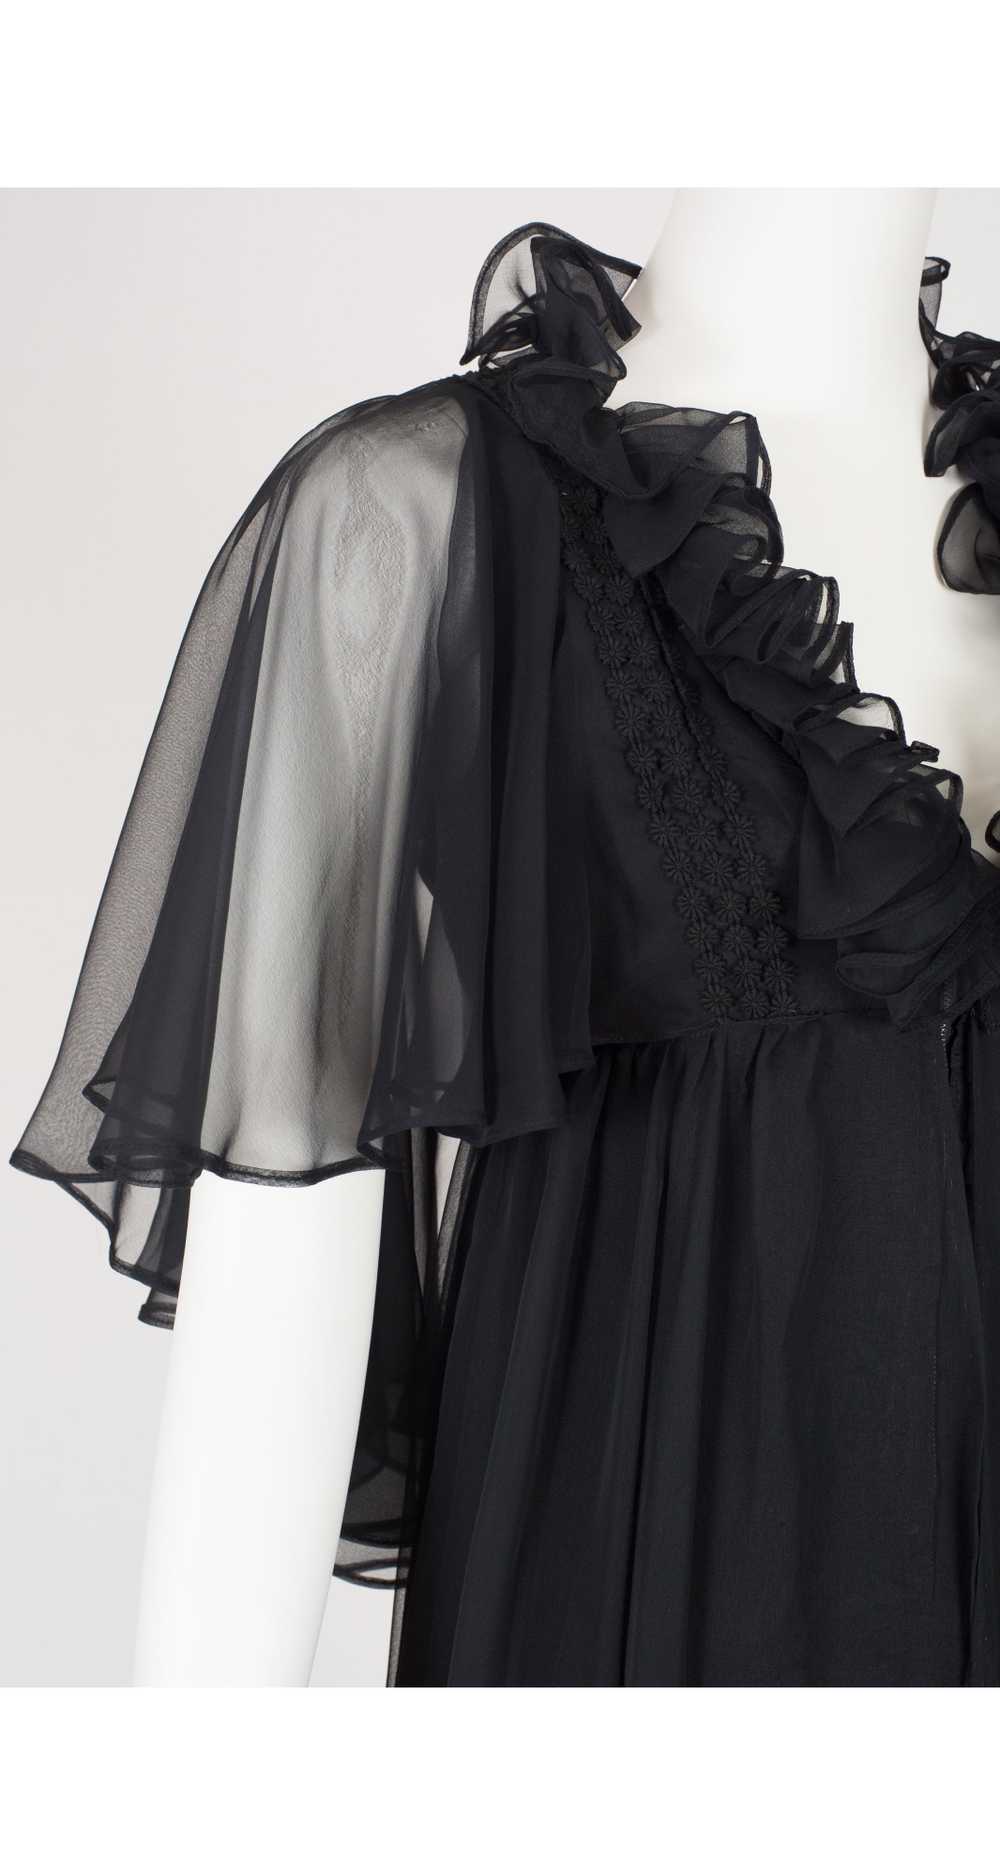 Jean Varon 1970s Black Chiffon Ruffle Evening Gown - image 3